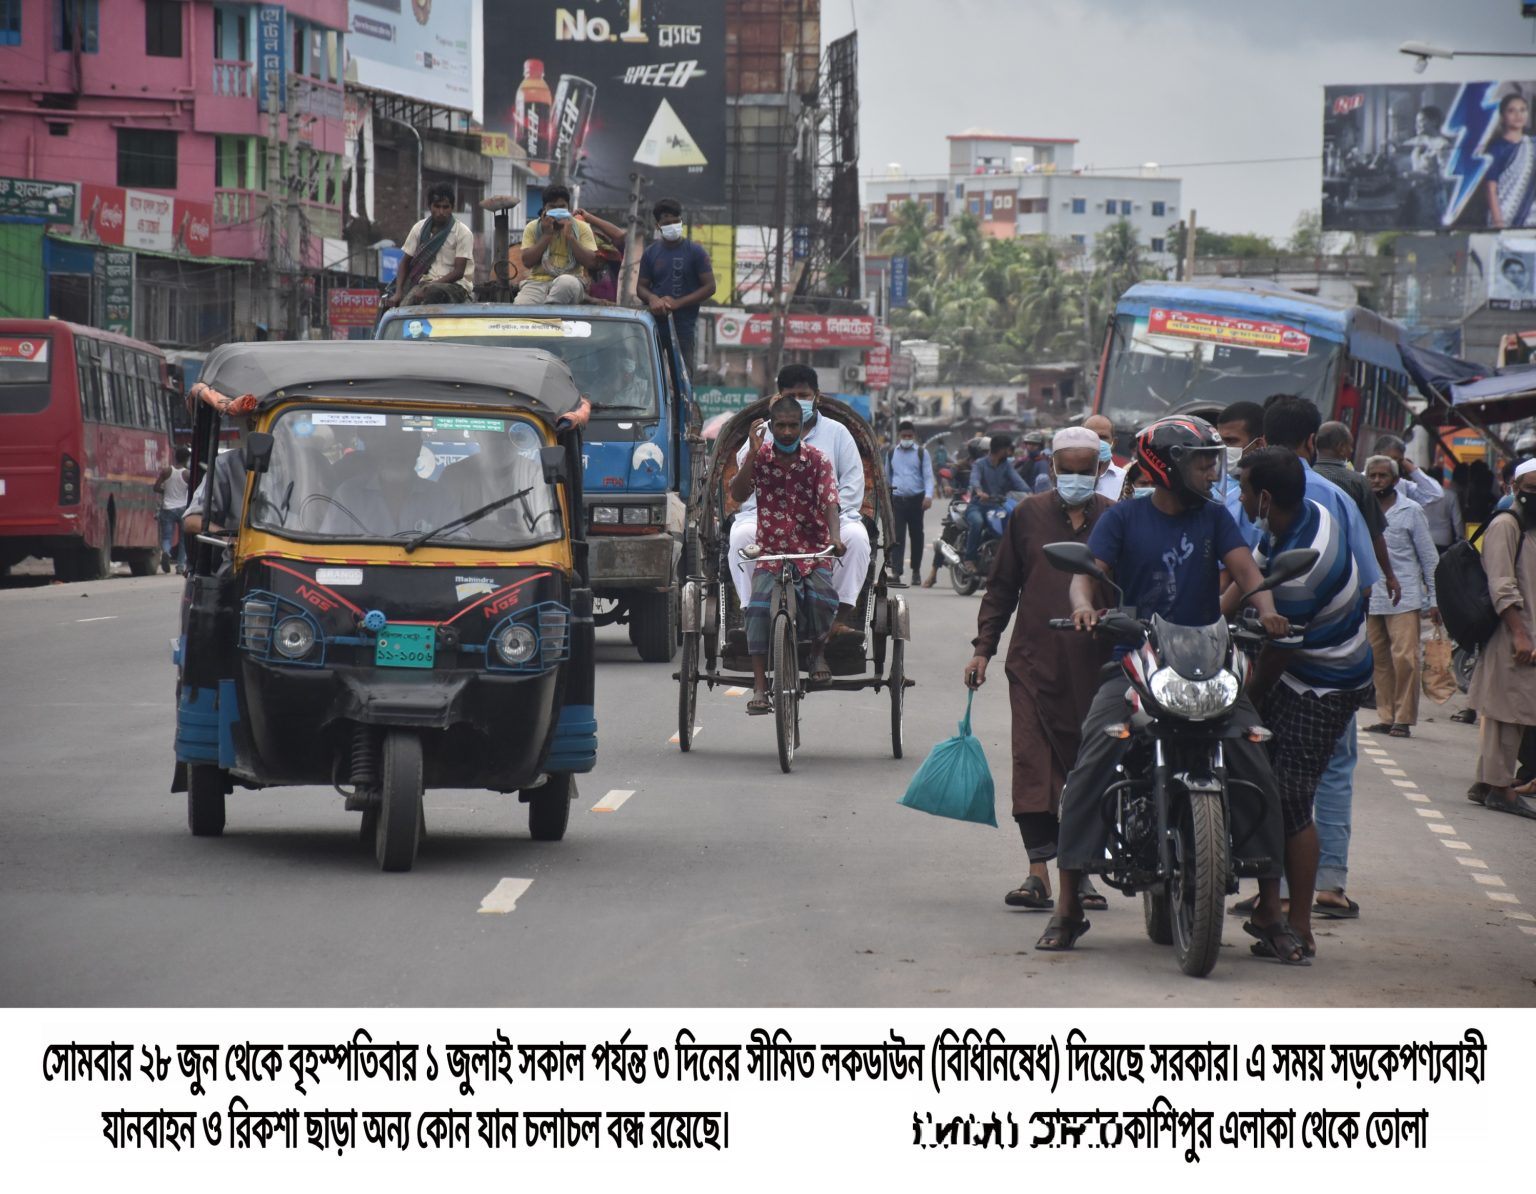 Barishal photo Operation of Passenger carrying mass communication stopped in Barishal 1 বরিশালে গণপরিবহন বন্ধ, মহাসড়কে যান চলাচল সীমিত